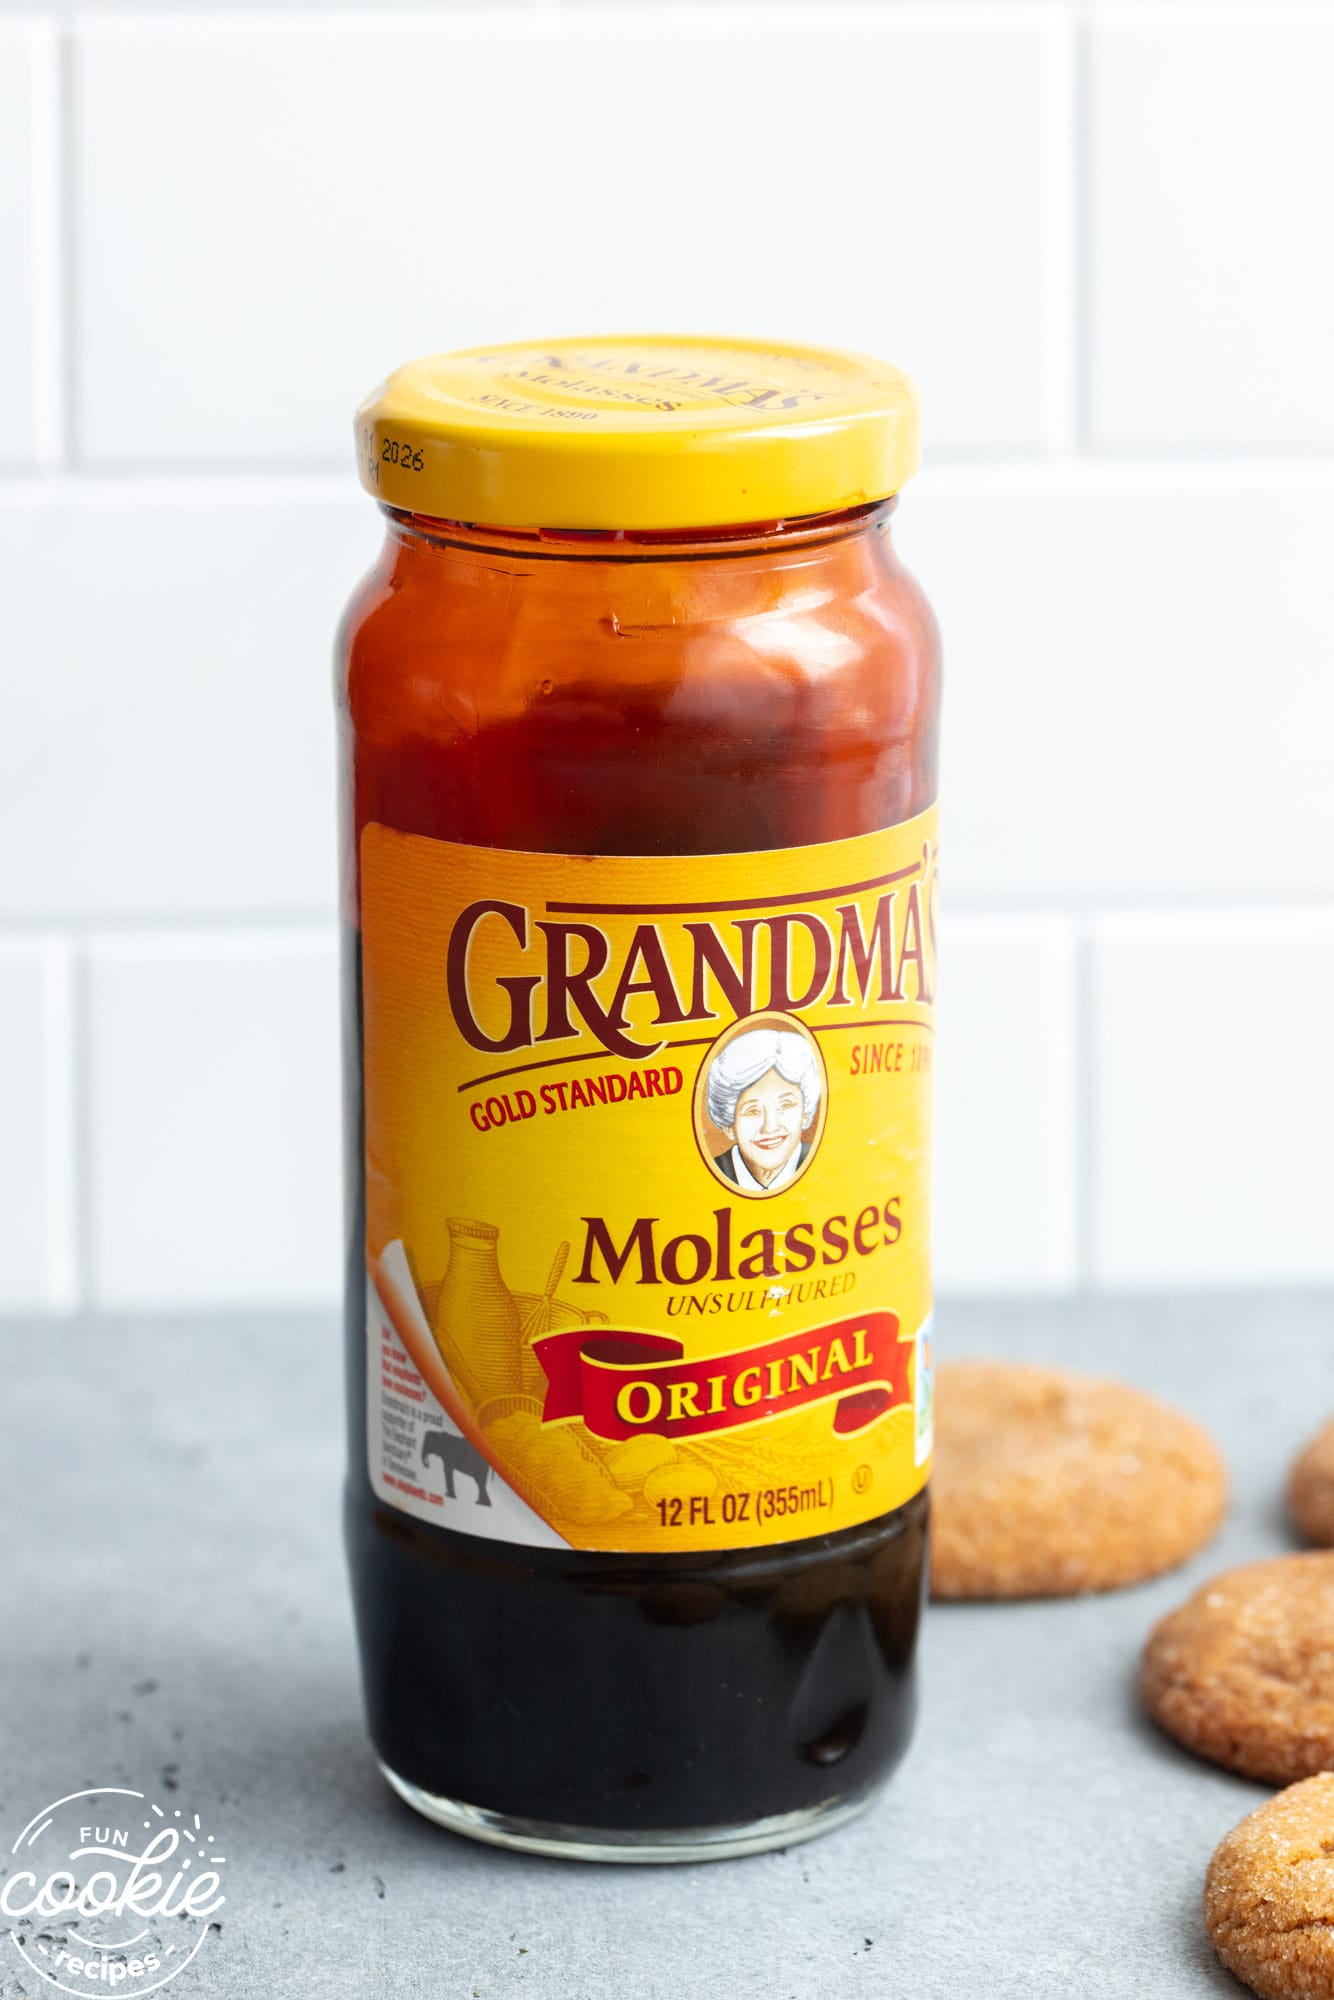 A jar of Grandma's molasses